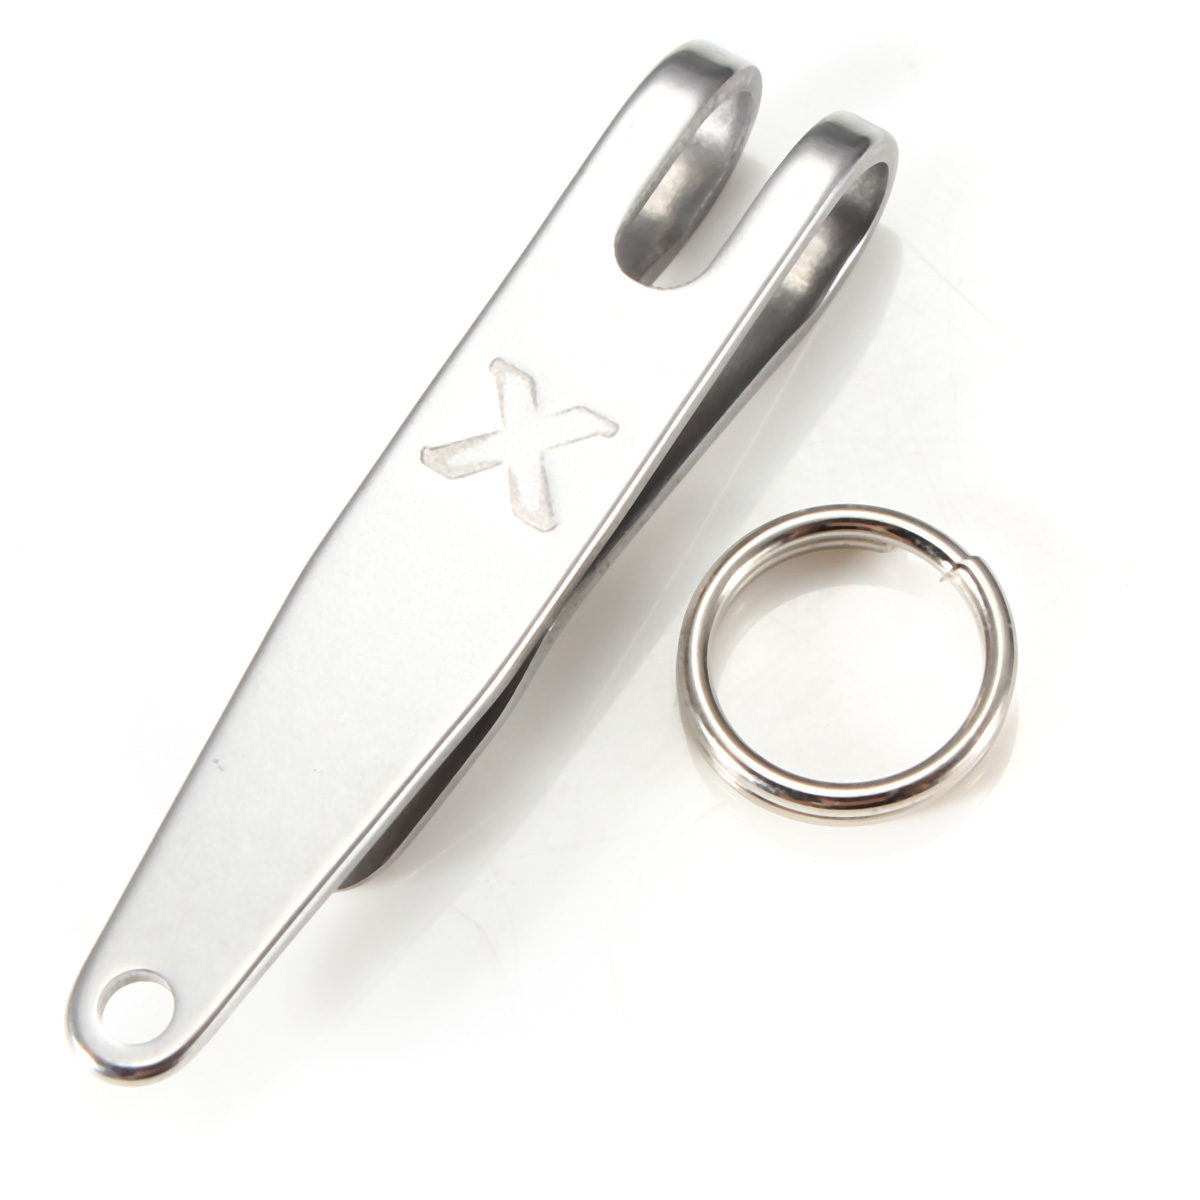 Xtools-EDC-Mini-Clip-Flashlight-Clip-Money-Cash-Holder-Key-Chain-Clip-With-Ring-988356